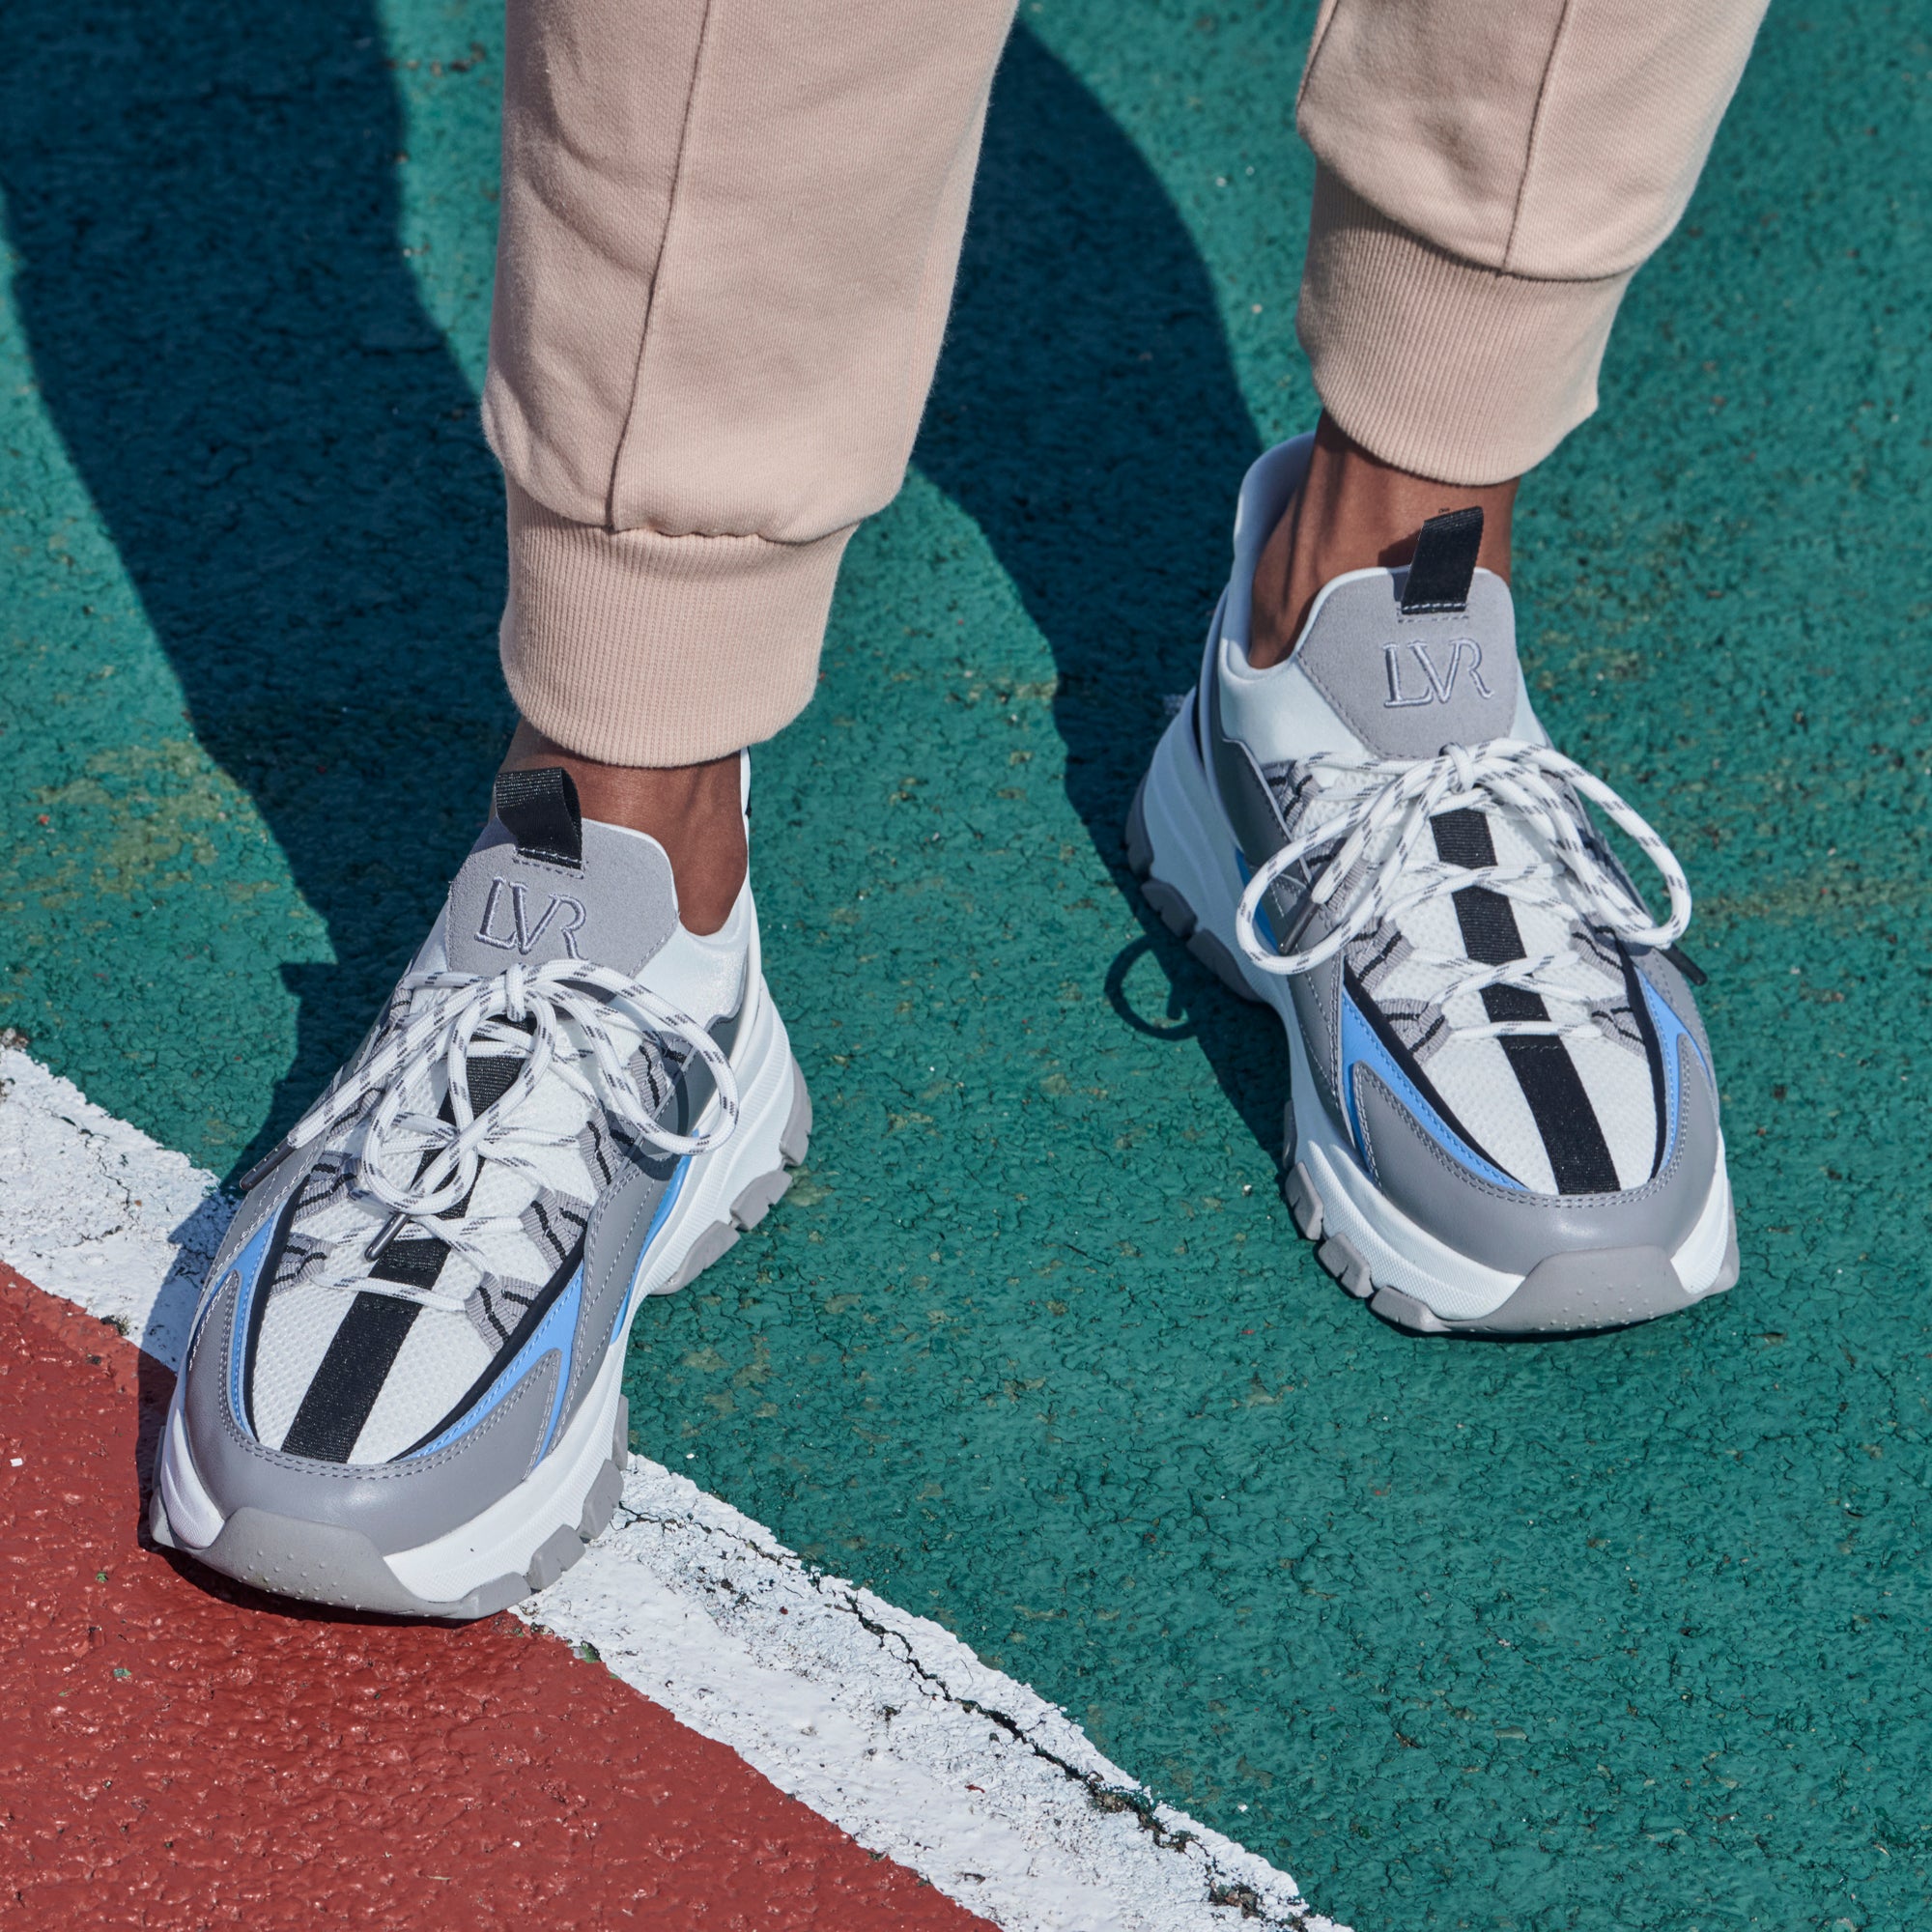 LAVAIR Creator EVO White/Blue Sneakers Lifestyle on Foot.